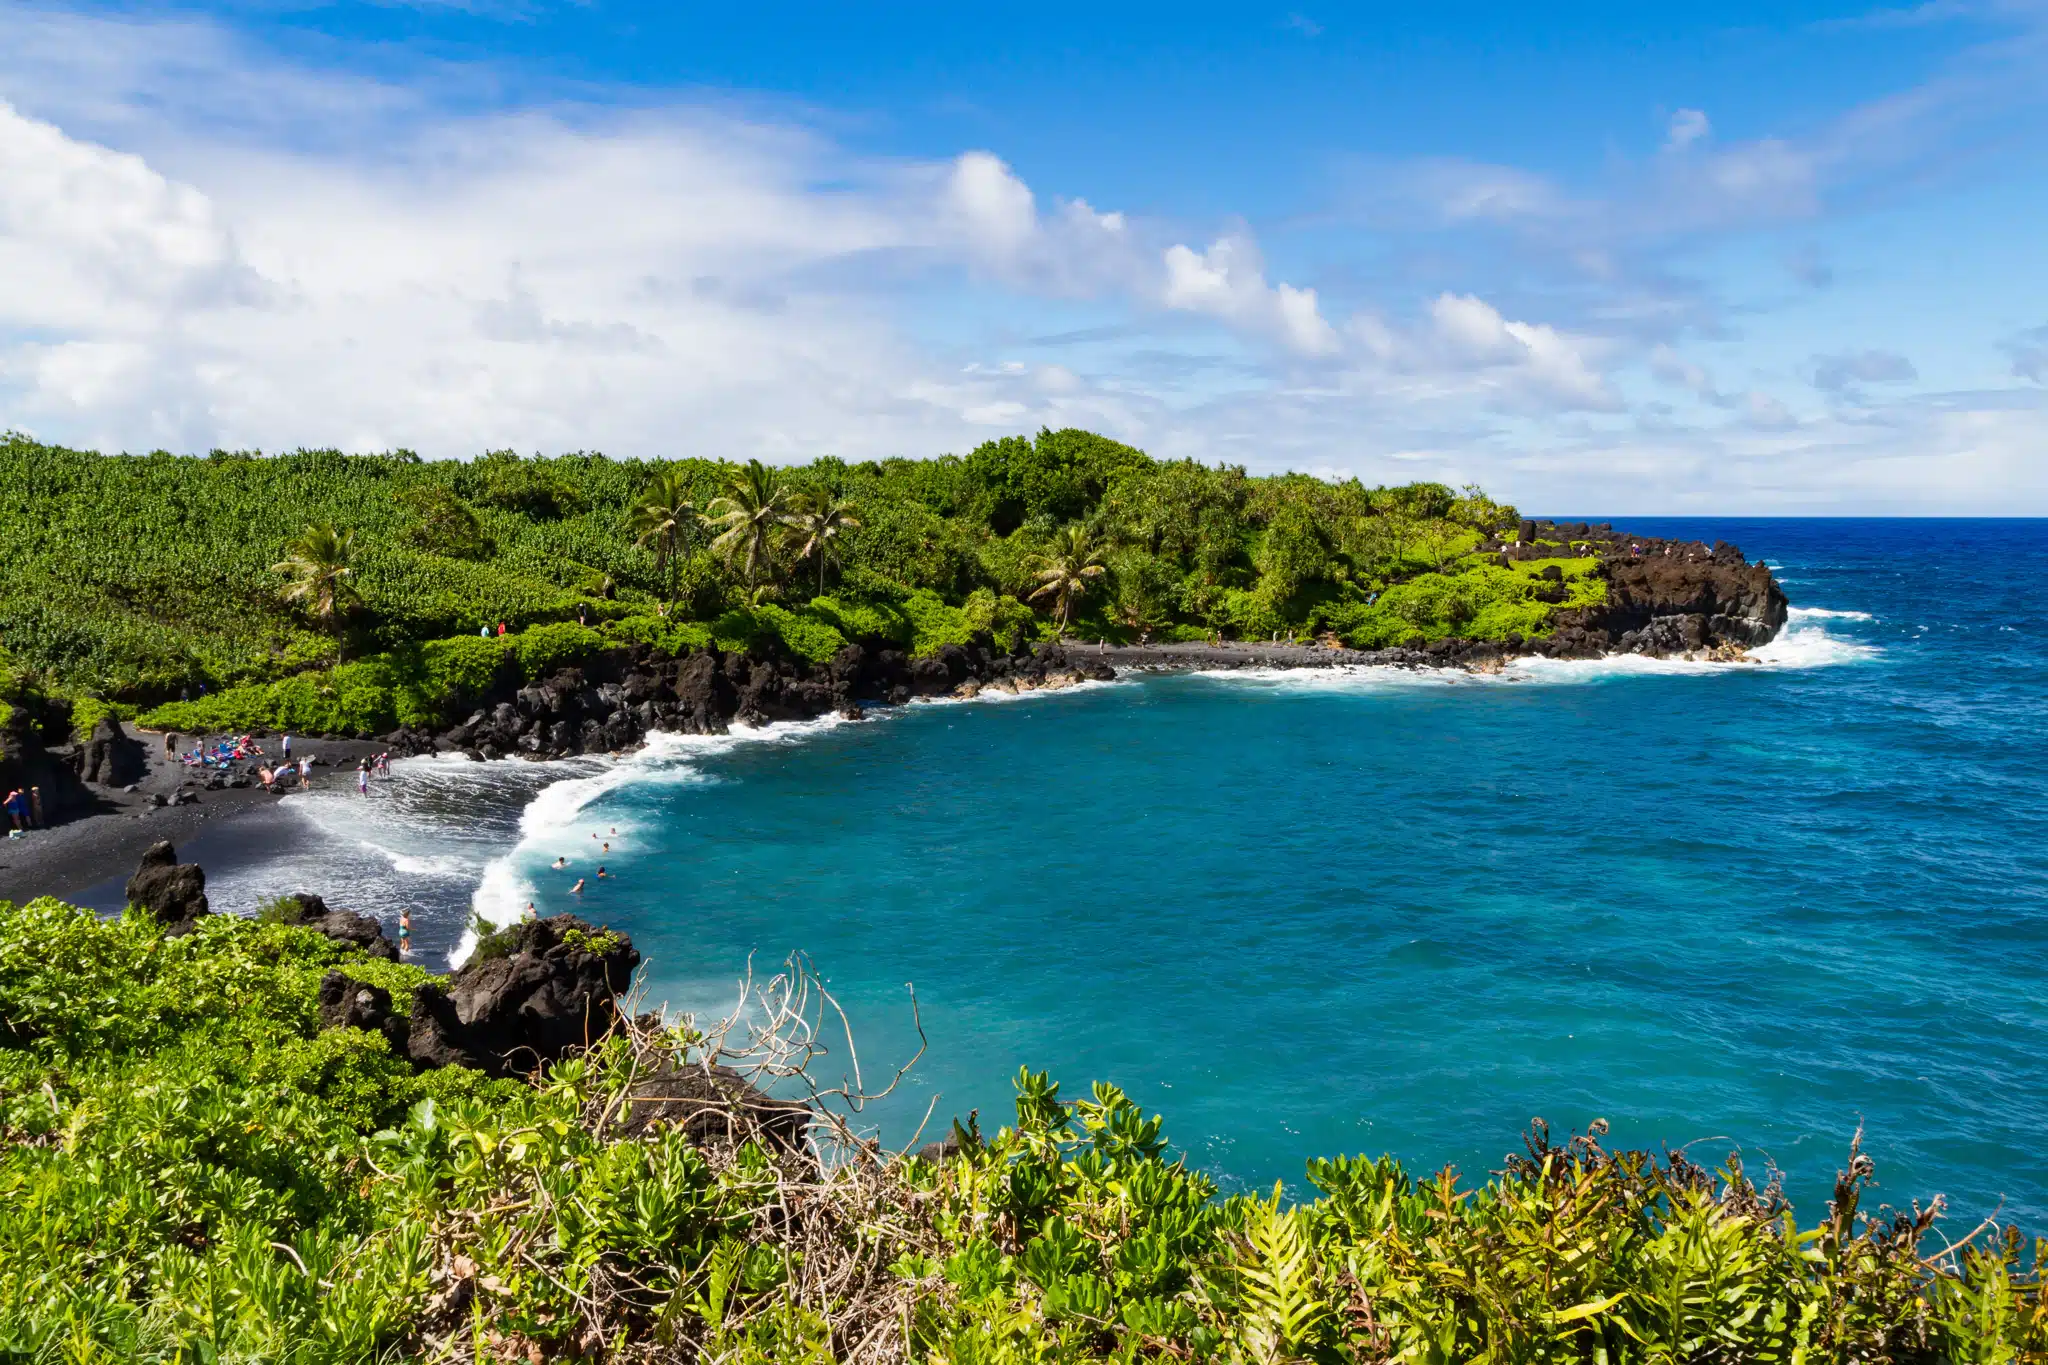 Wai'anapanapa Black Sand Beach is a Beach located in the city of Hana on Maui, Hawaii